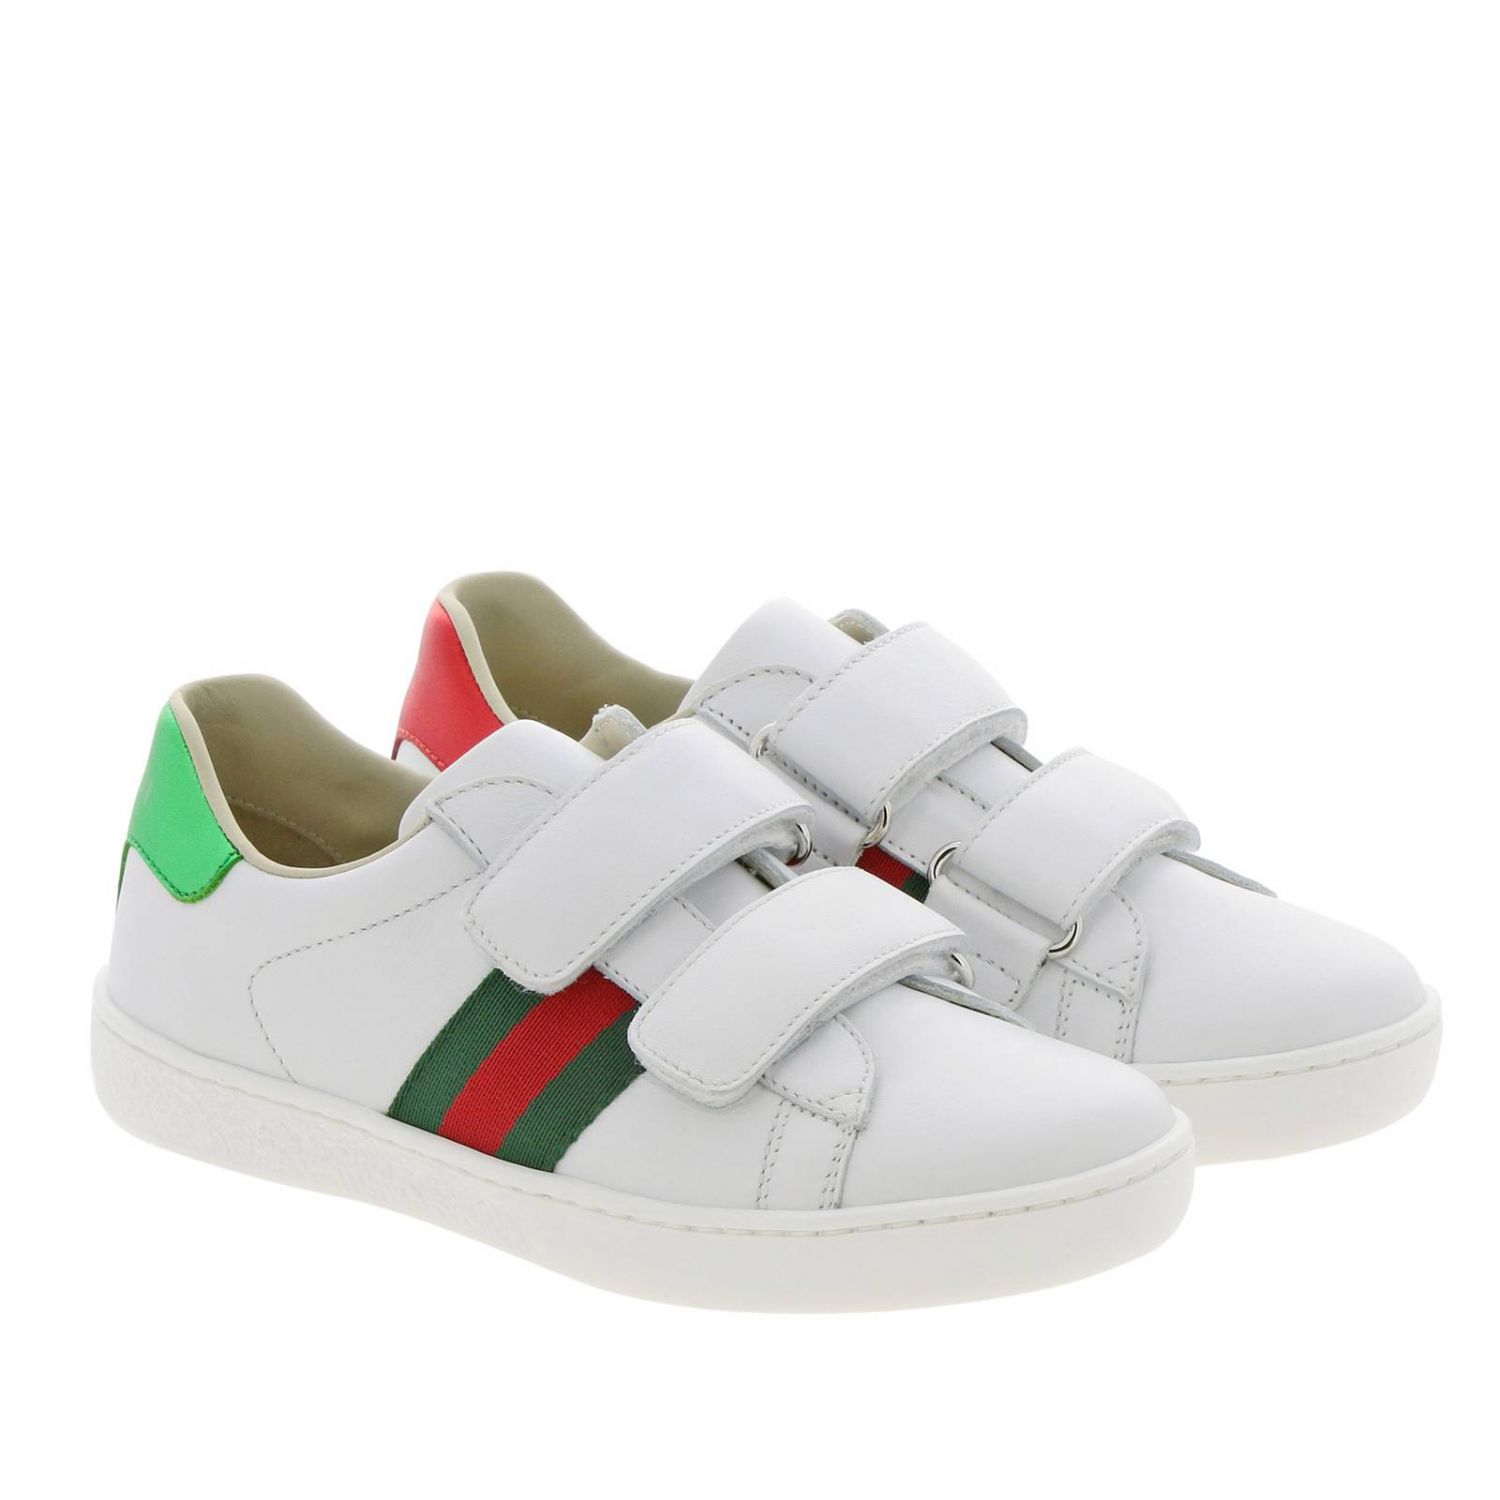 Shoes kids Gucci | Shoes Gucci Kids White | Shoes Gucci 455448 CPWP0 ...